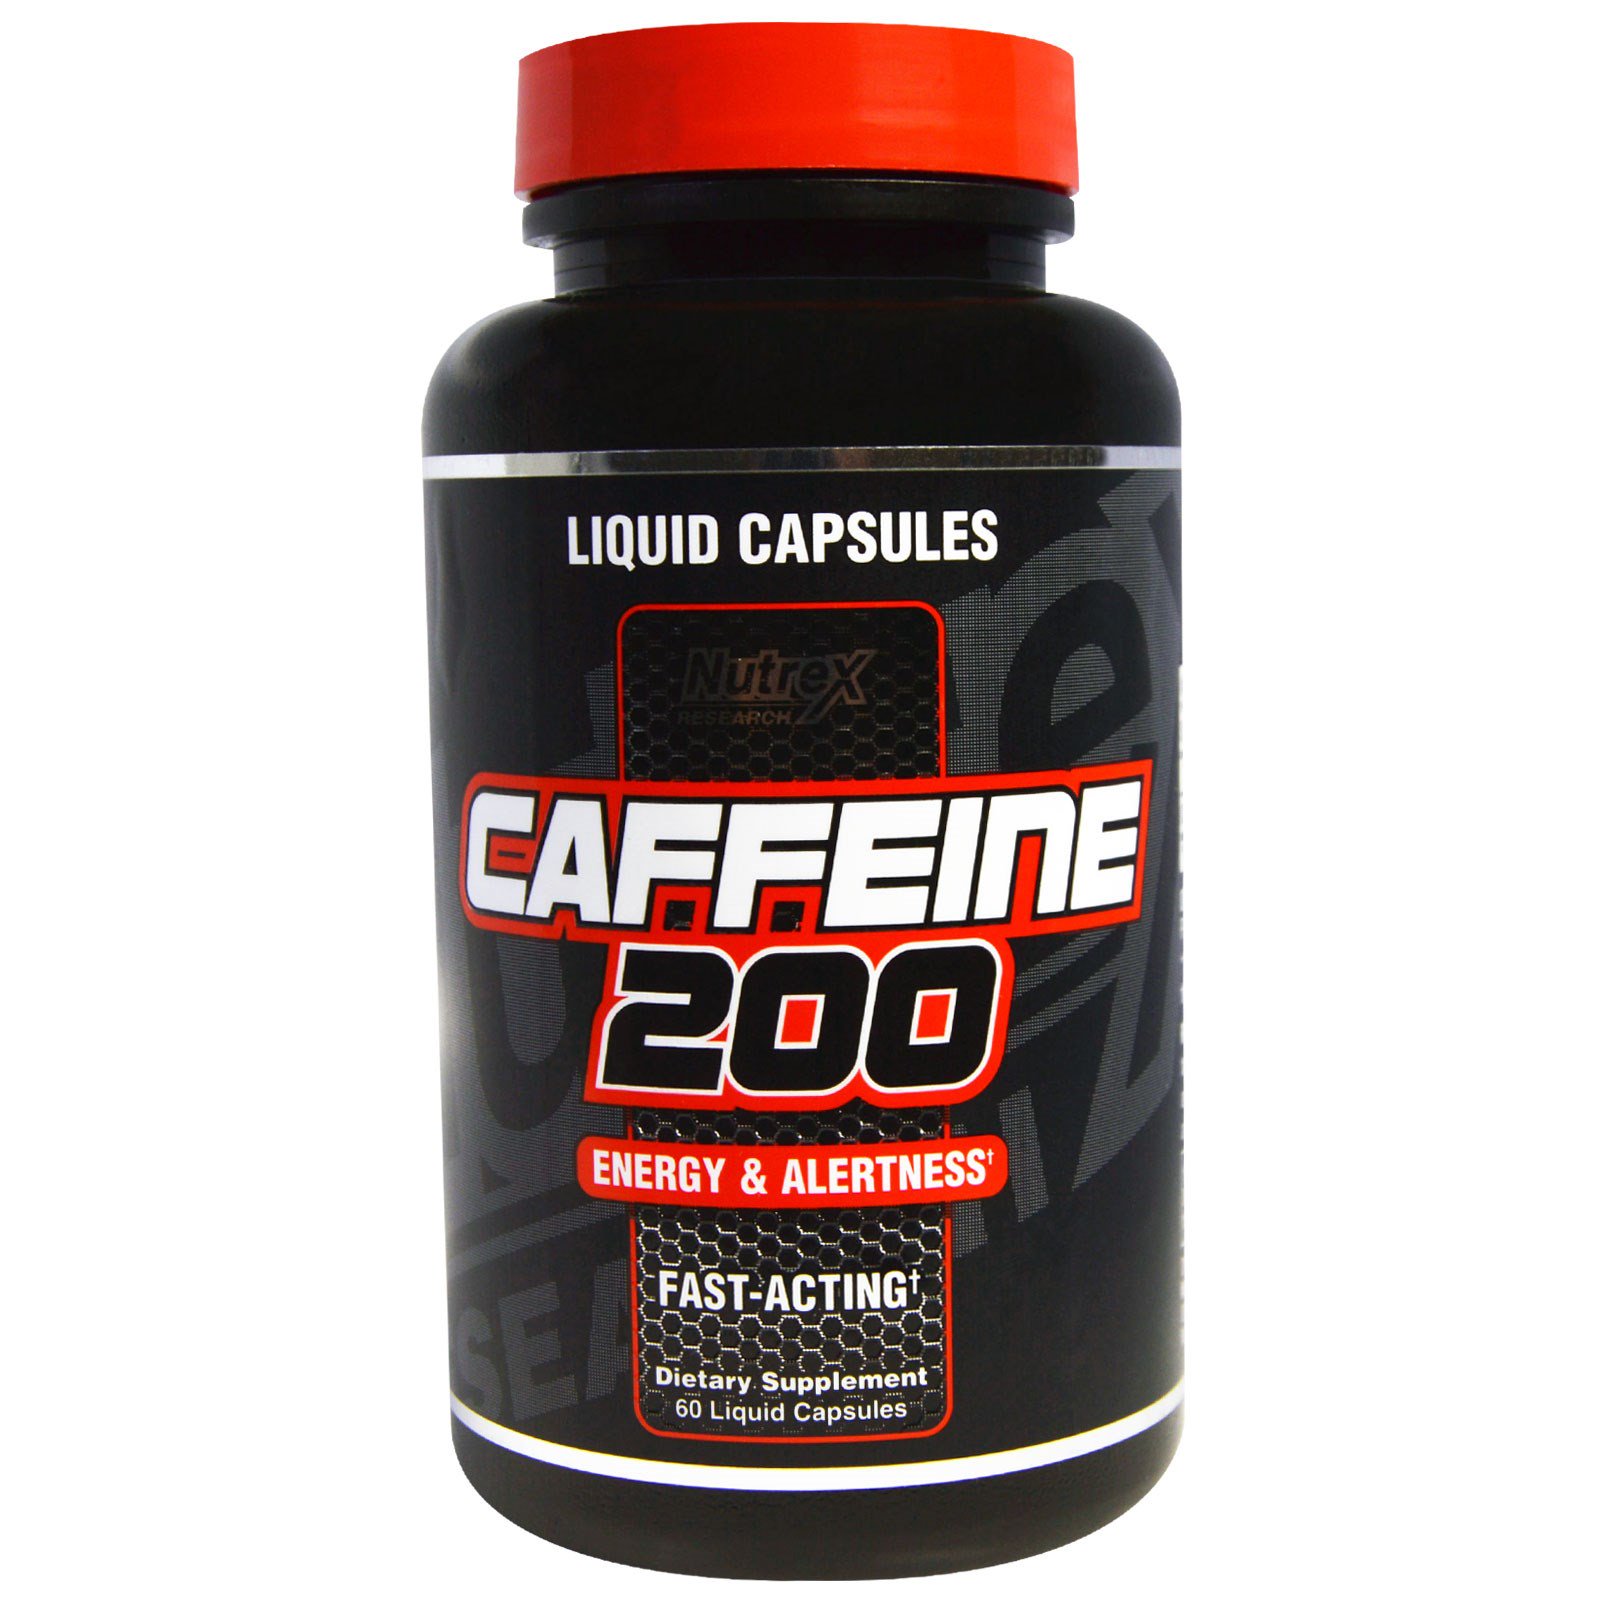 CAFFEINE 200, 60caps. - NUTREX